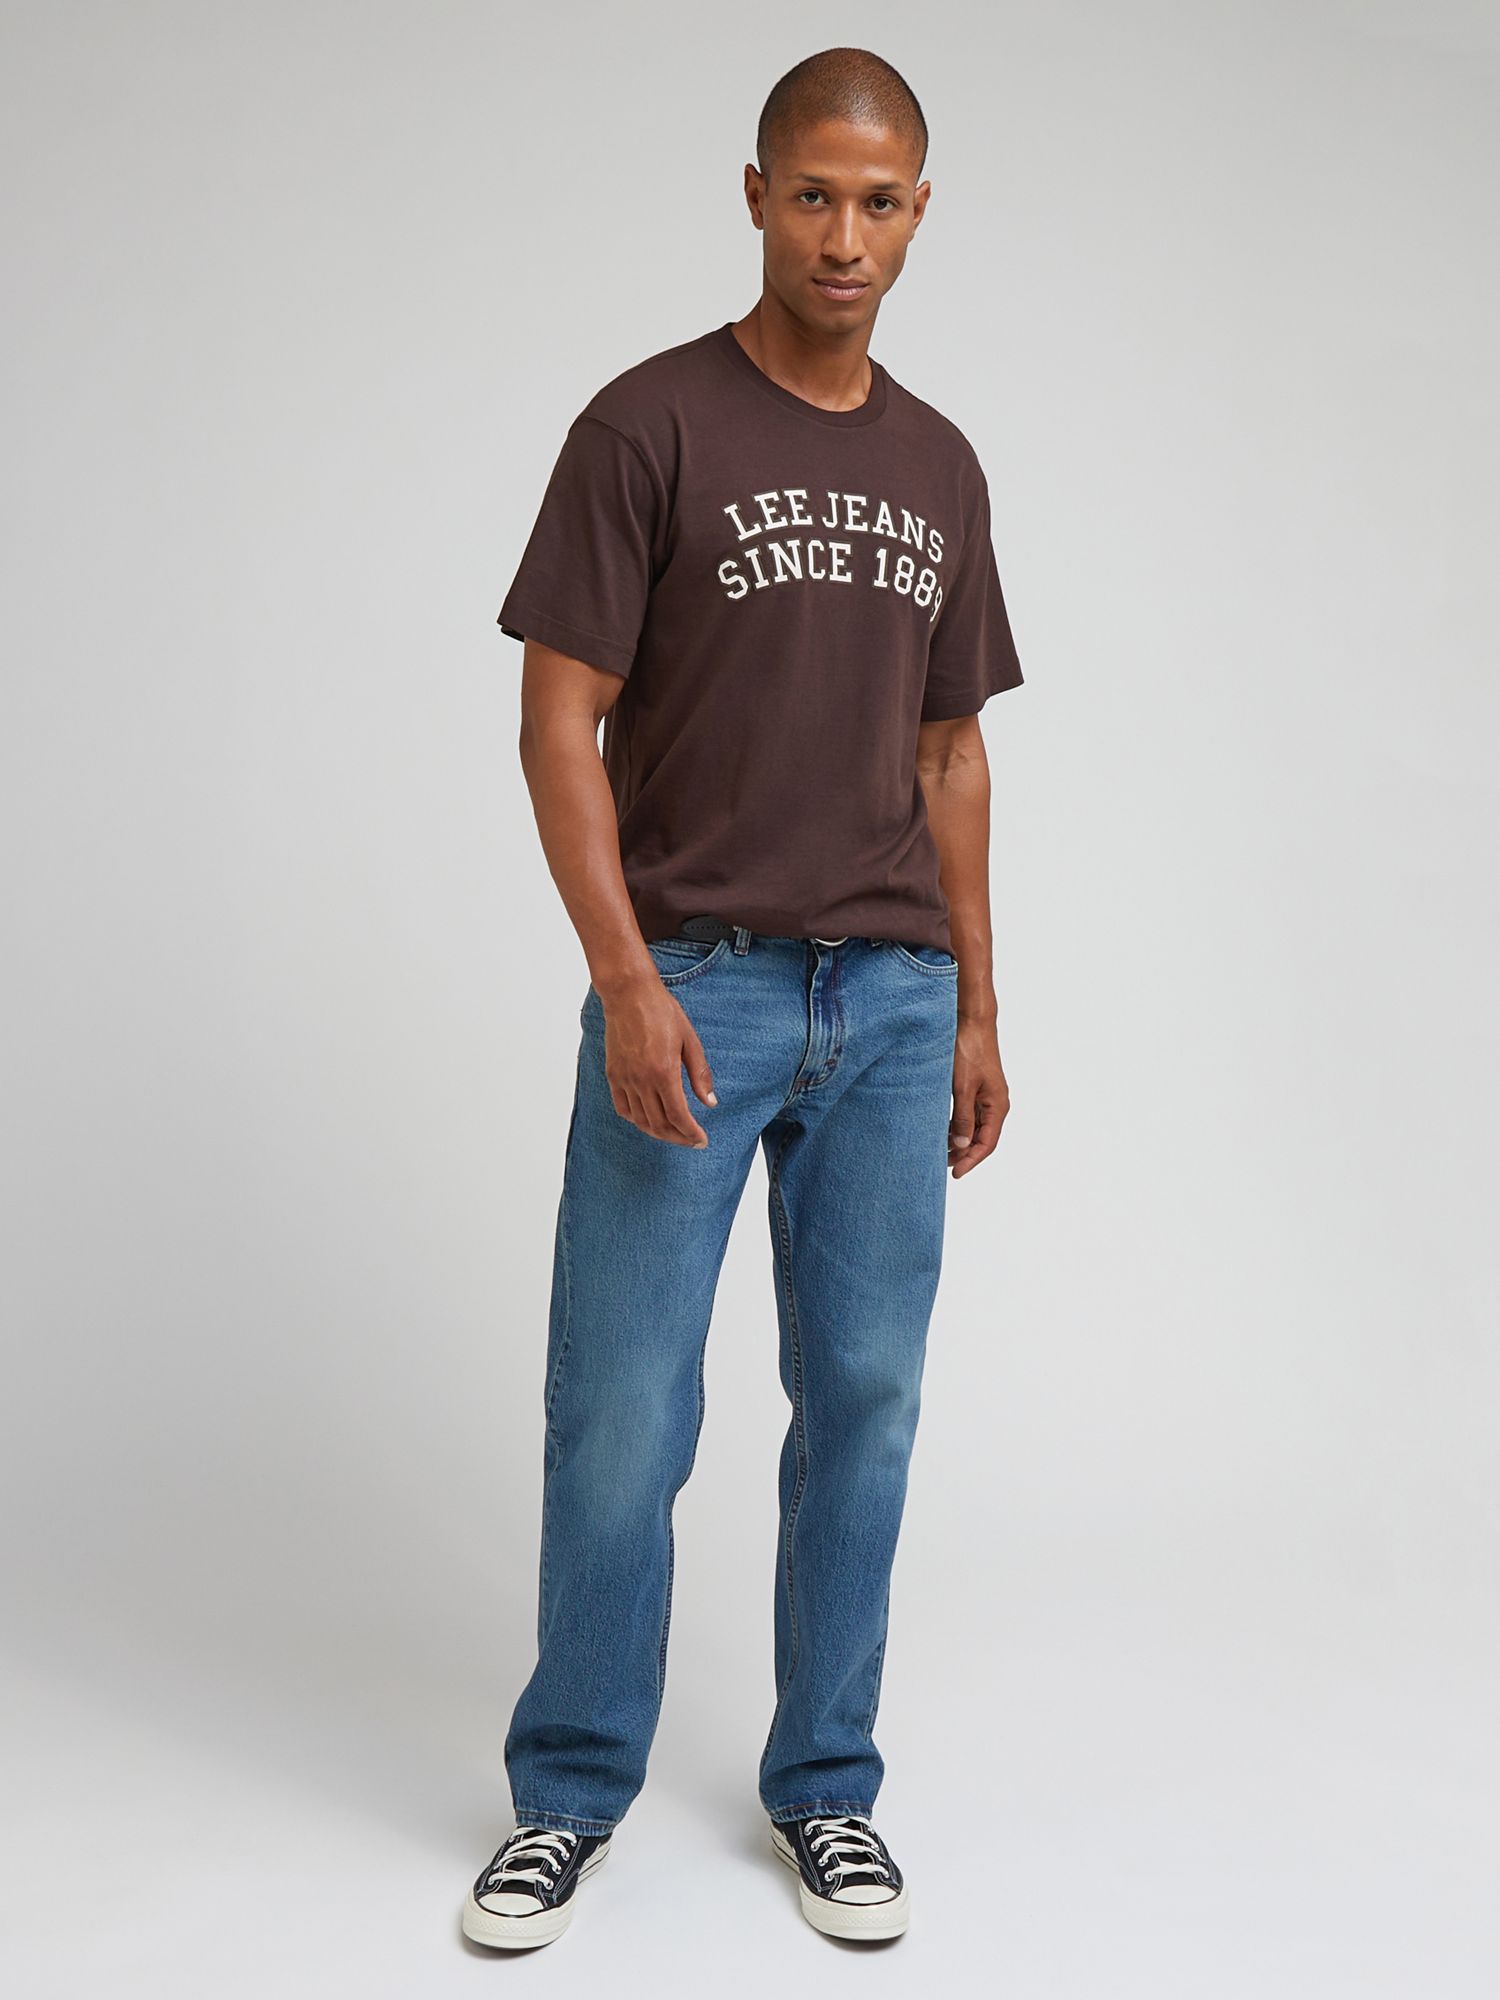 Lee Logo Jeans 1889 Short Sleeve T-Shirt, Arabica, XL